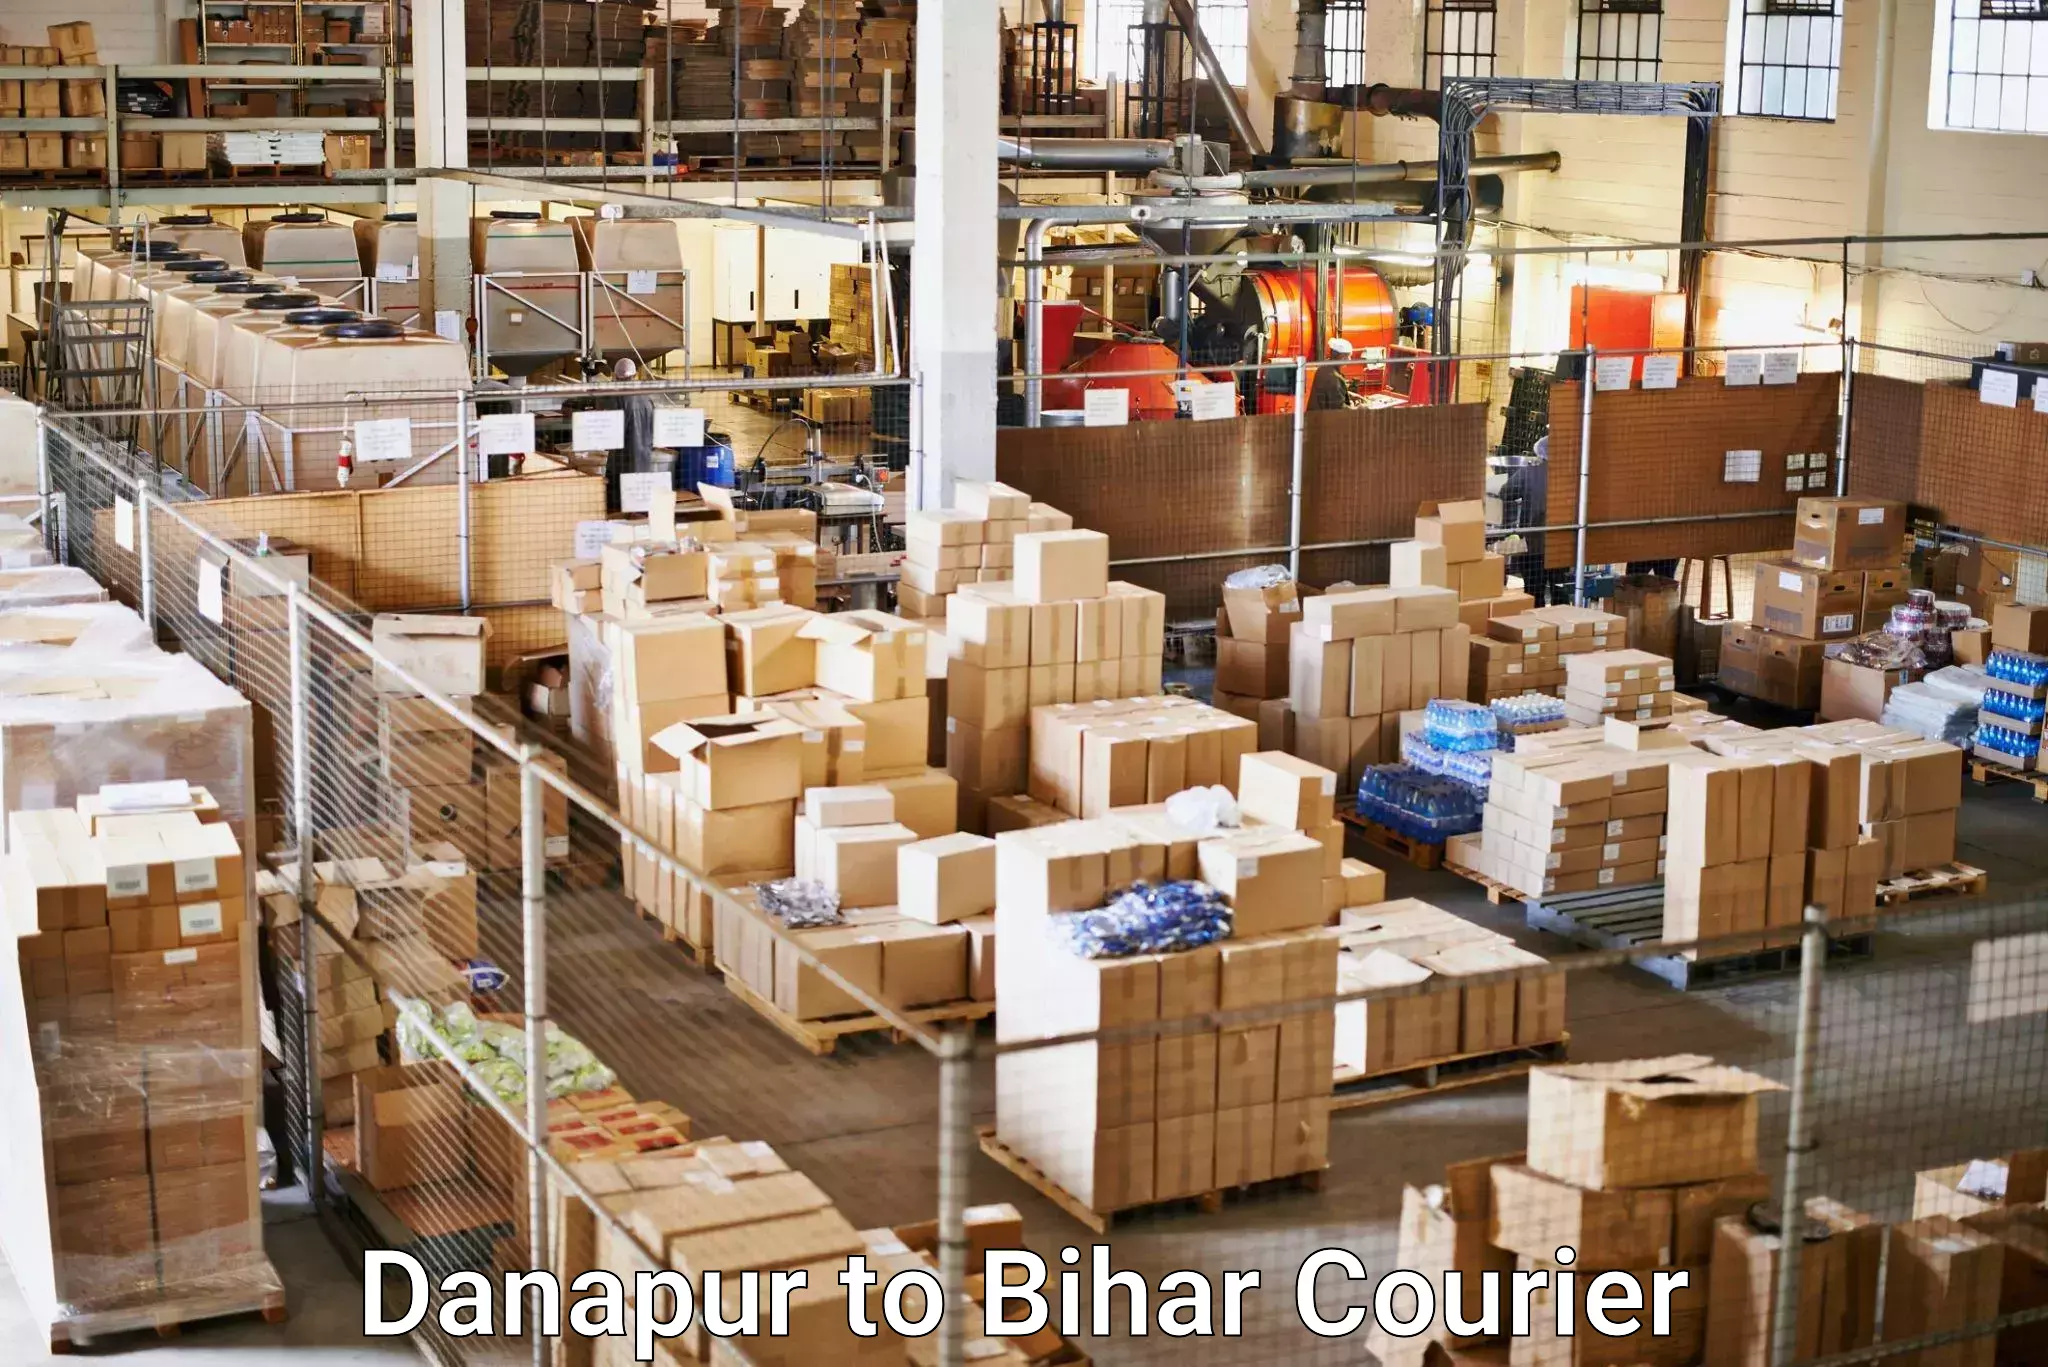 High-speed parcel service Danapur to Bihar